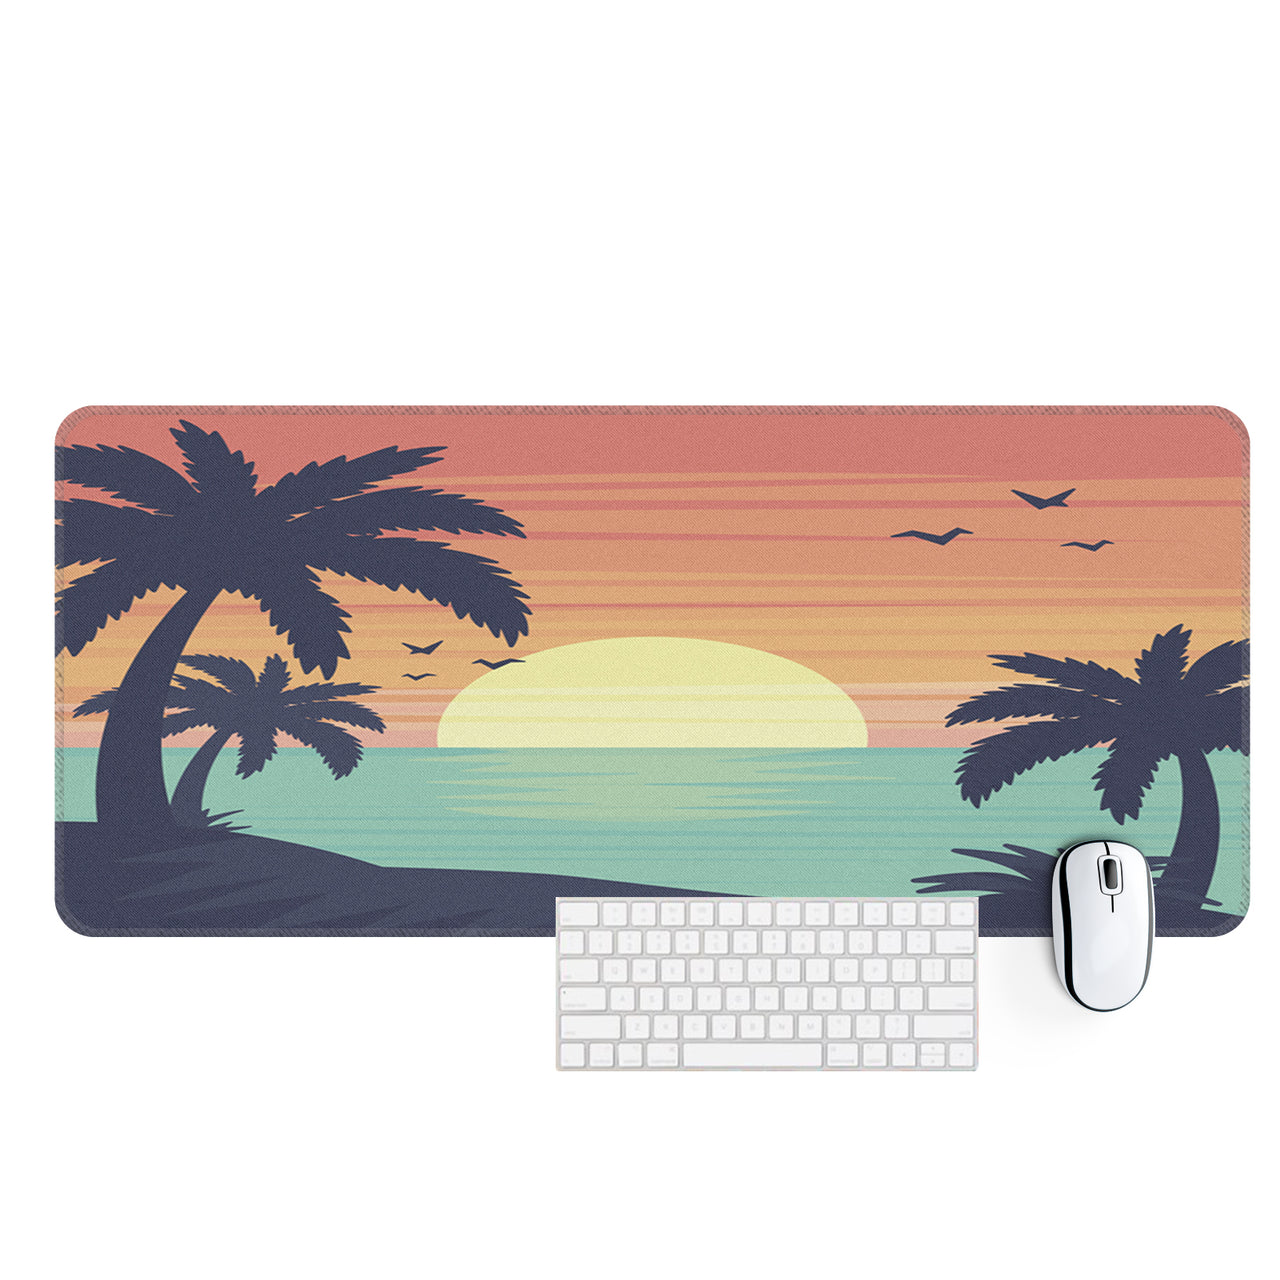 Tropical Summer Theme Designed Desk Mats